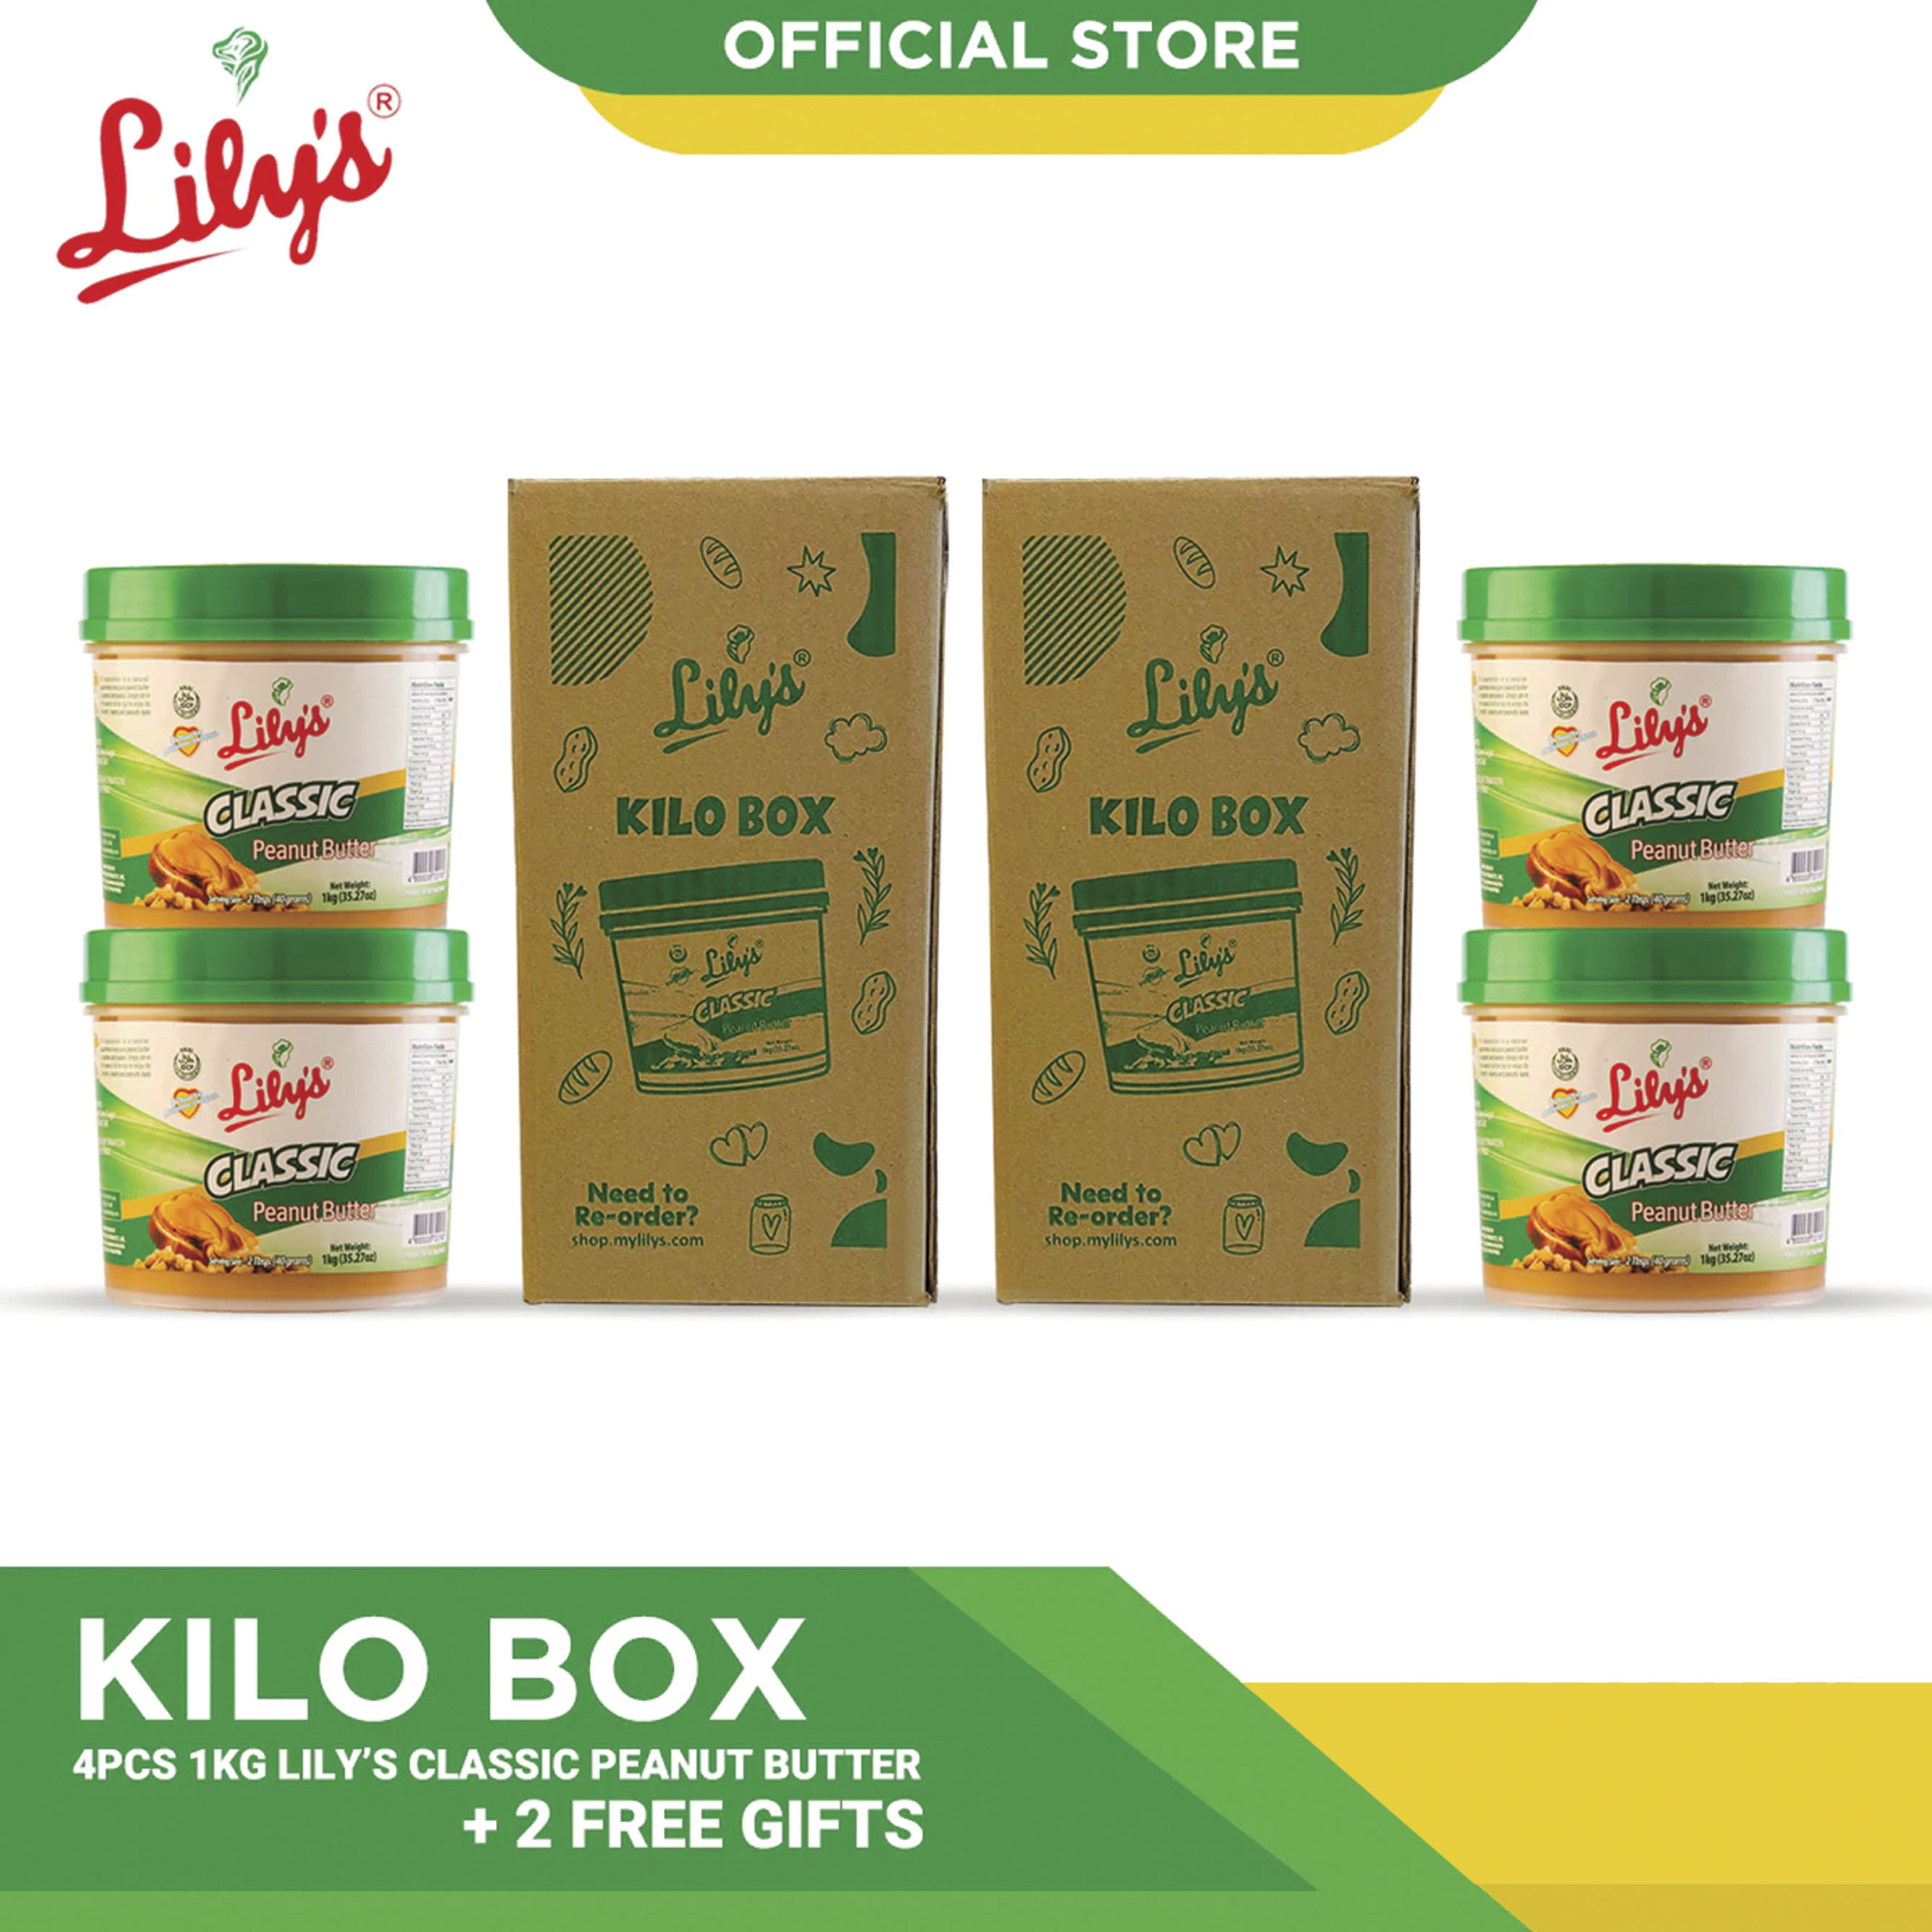 KILO BOX 4 pcs 1kg Lily's Classic Peanut Butter 1kg